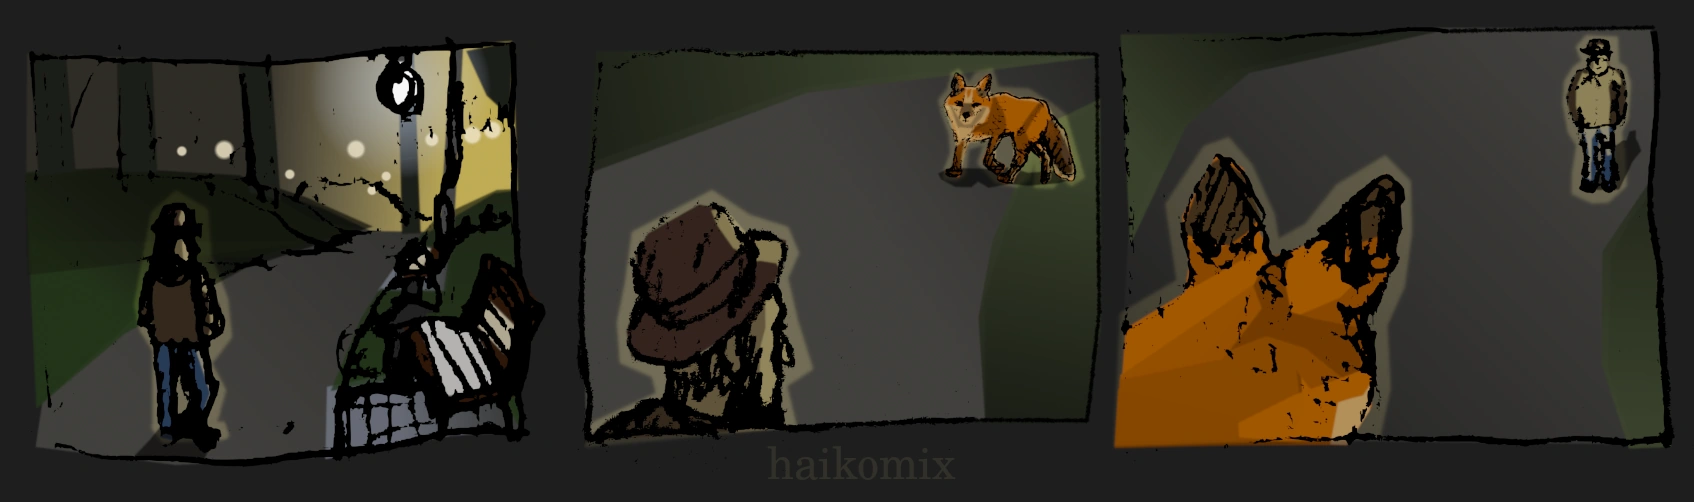 fox :: on an evening walk // I saw a fox from afar // he saw a human